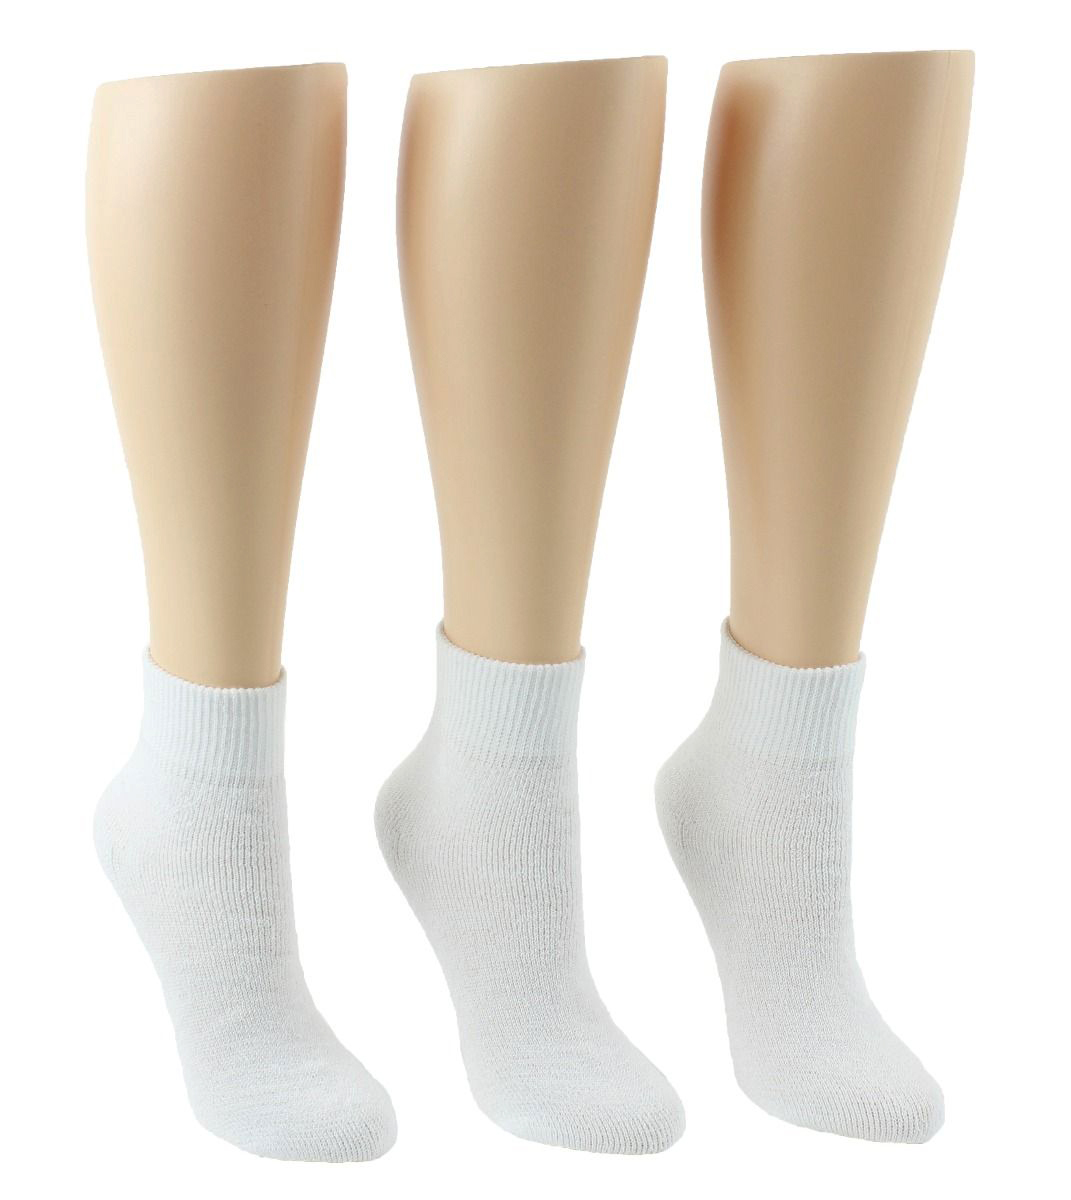 Women's Cotton Athletic Ankle Socks - White